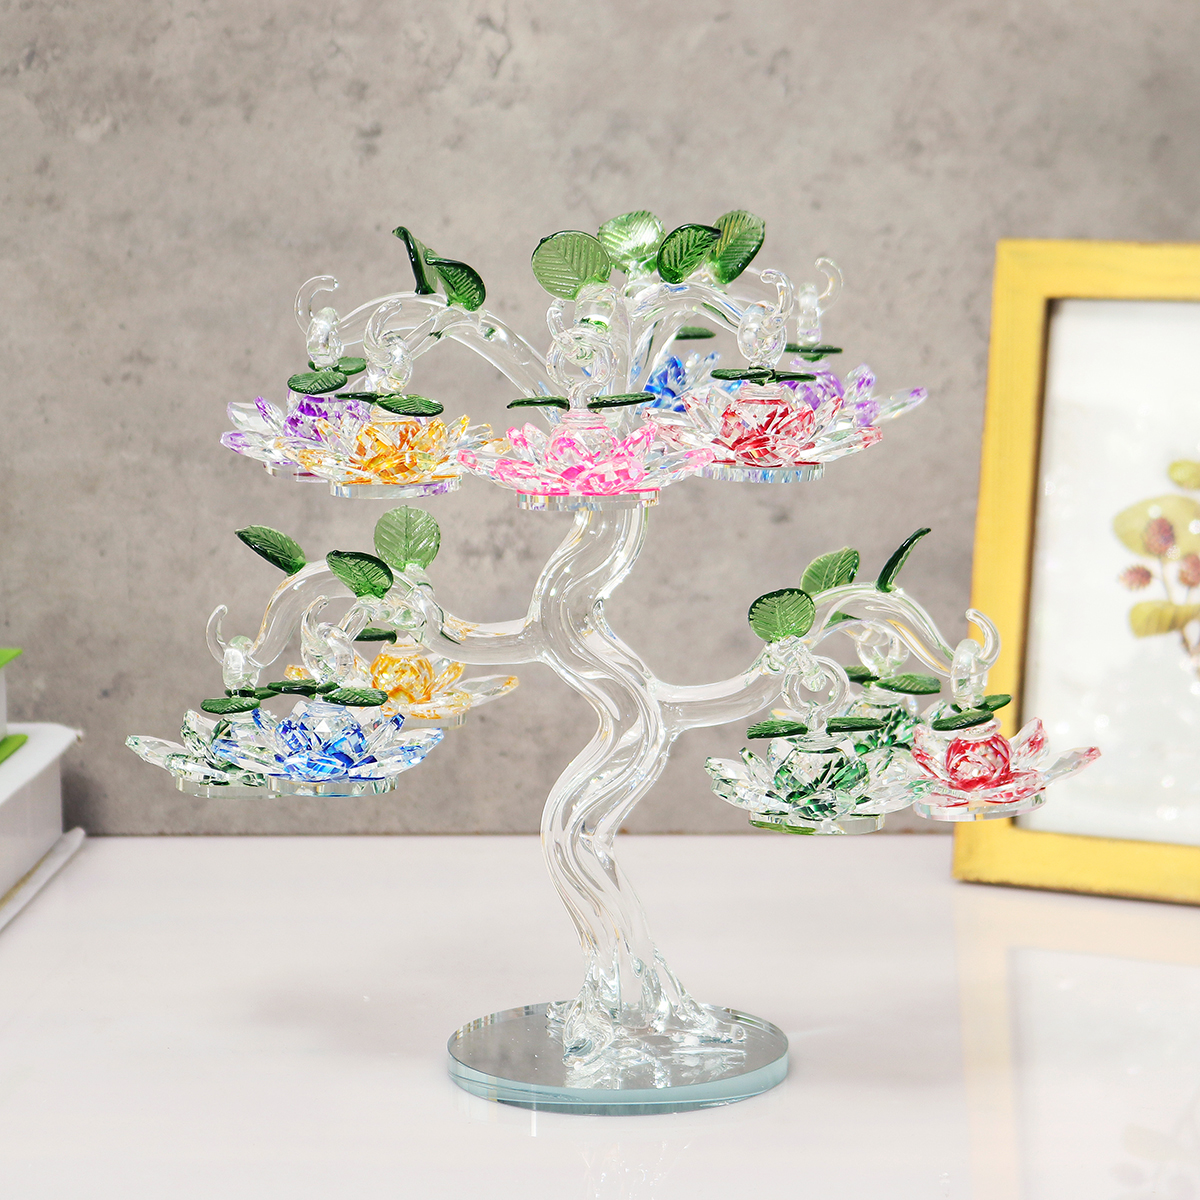 Transparent-Chirstmas-Tree-Hanging-Ornaments-60mm-Crystal-Glass-Lotus-Miniature-Figurine-Home-Decora-1453798-6